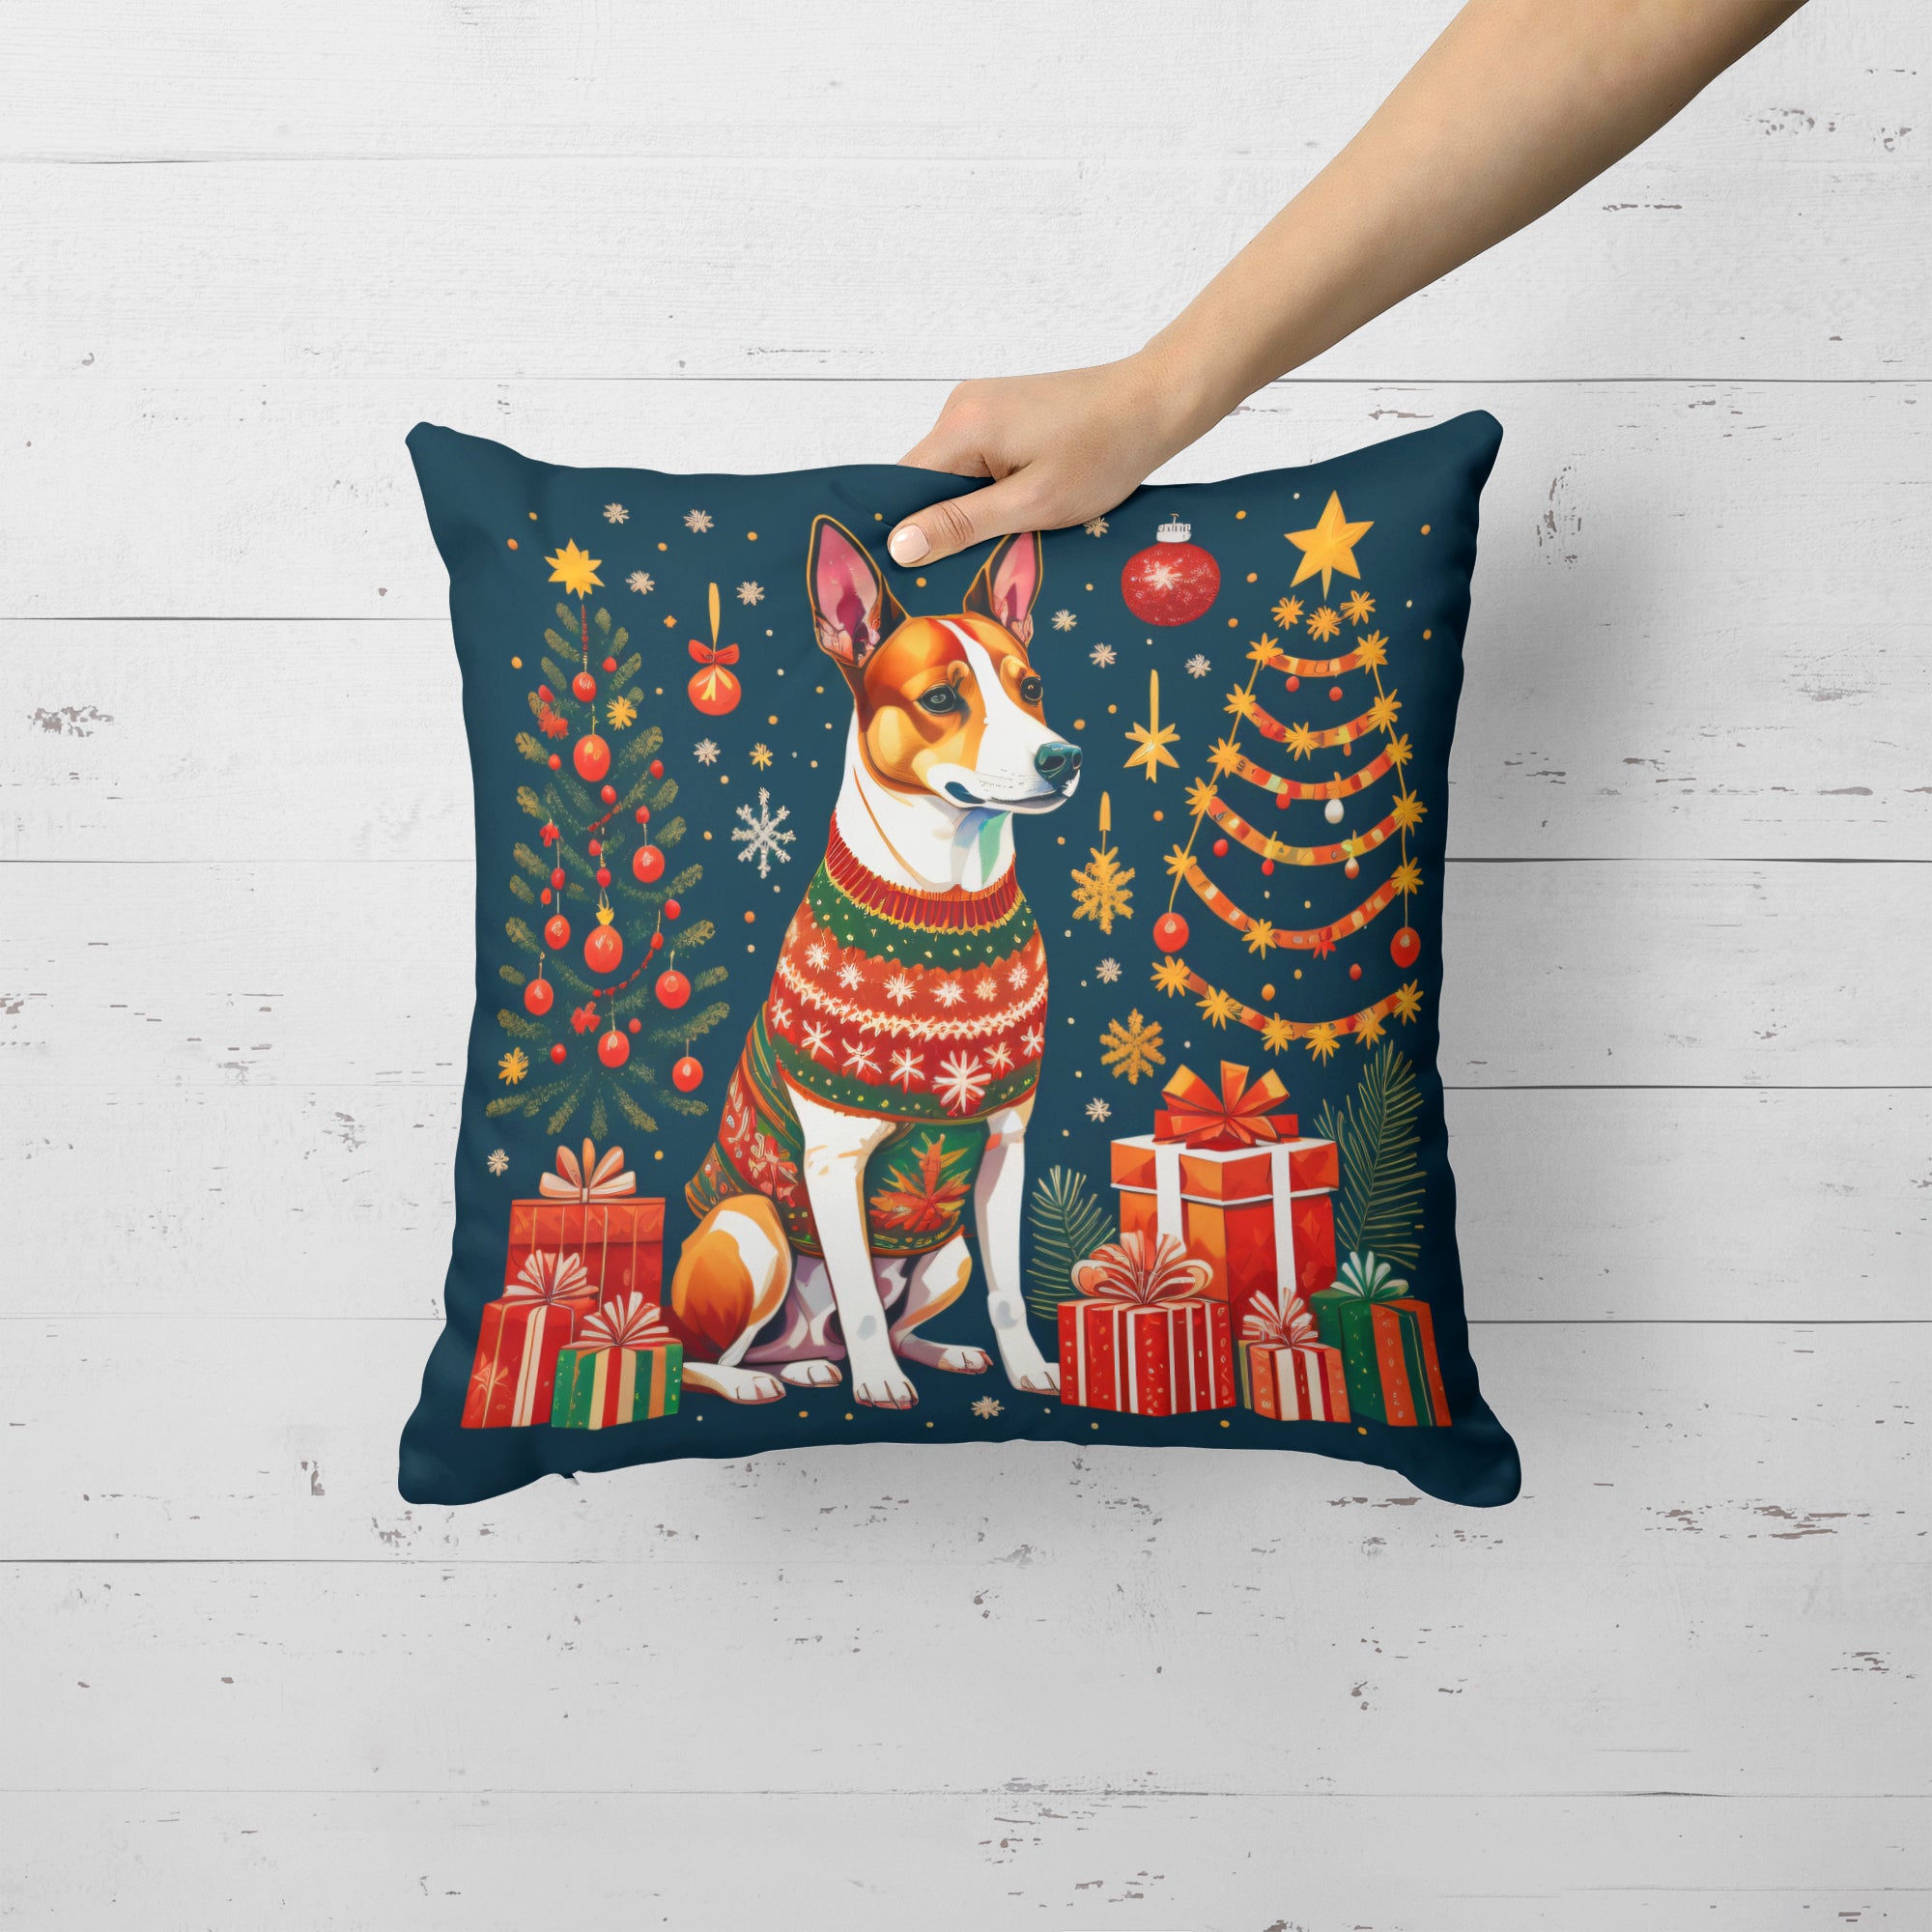 Buy this Basenji Christmas Fabric Decorative Pillow